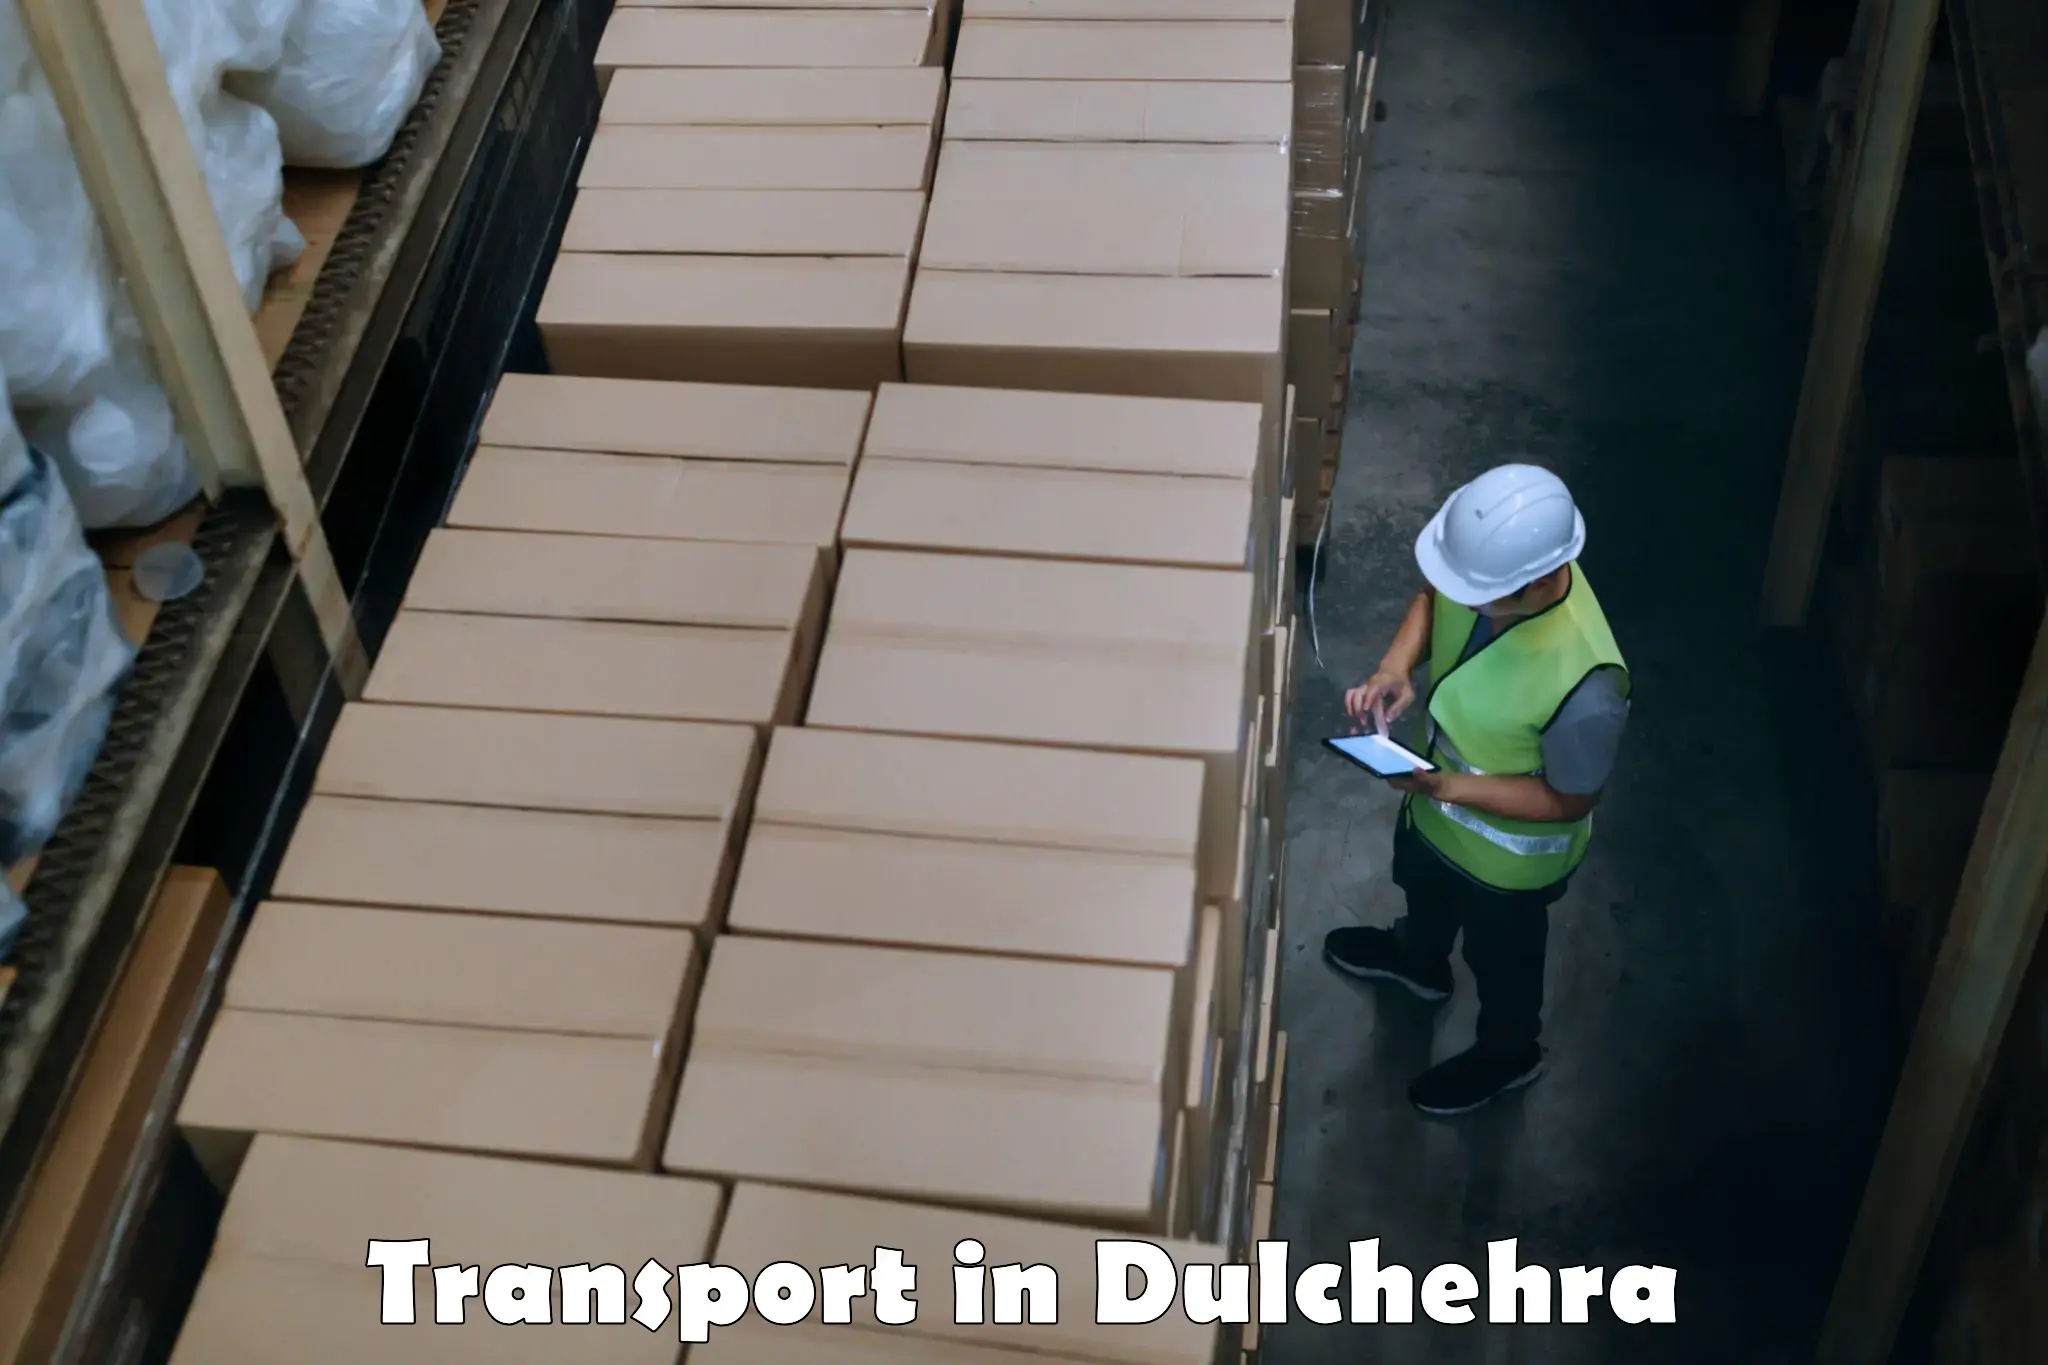 Transport in sharing in Dulchehra